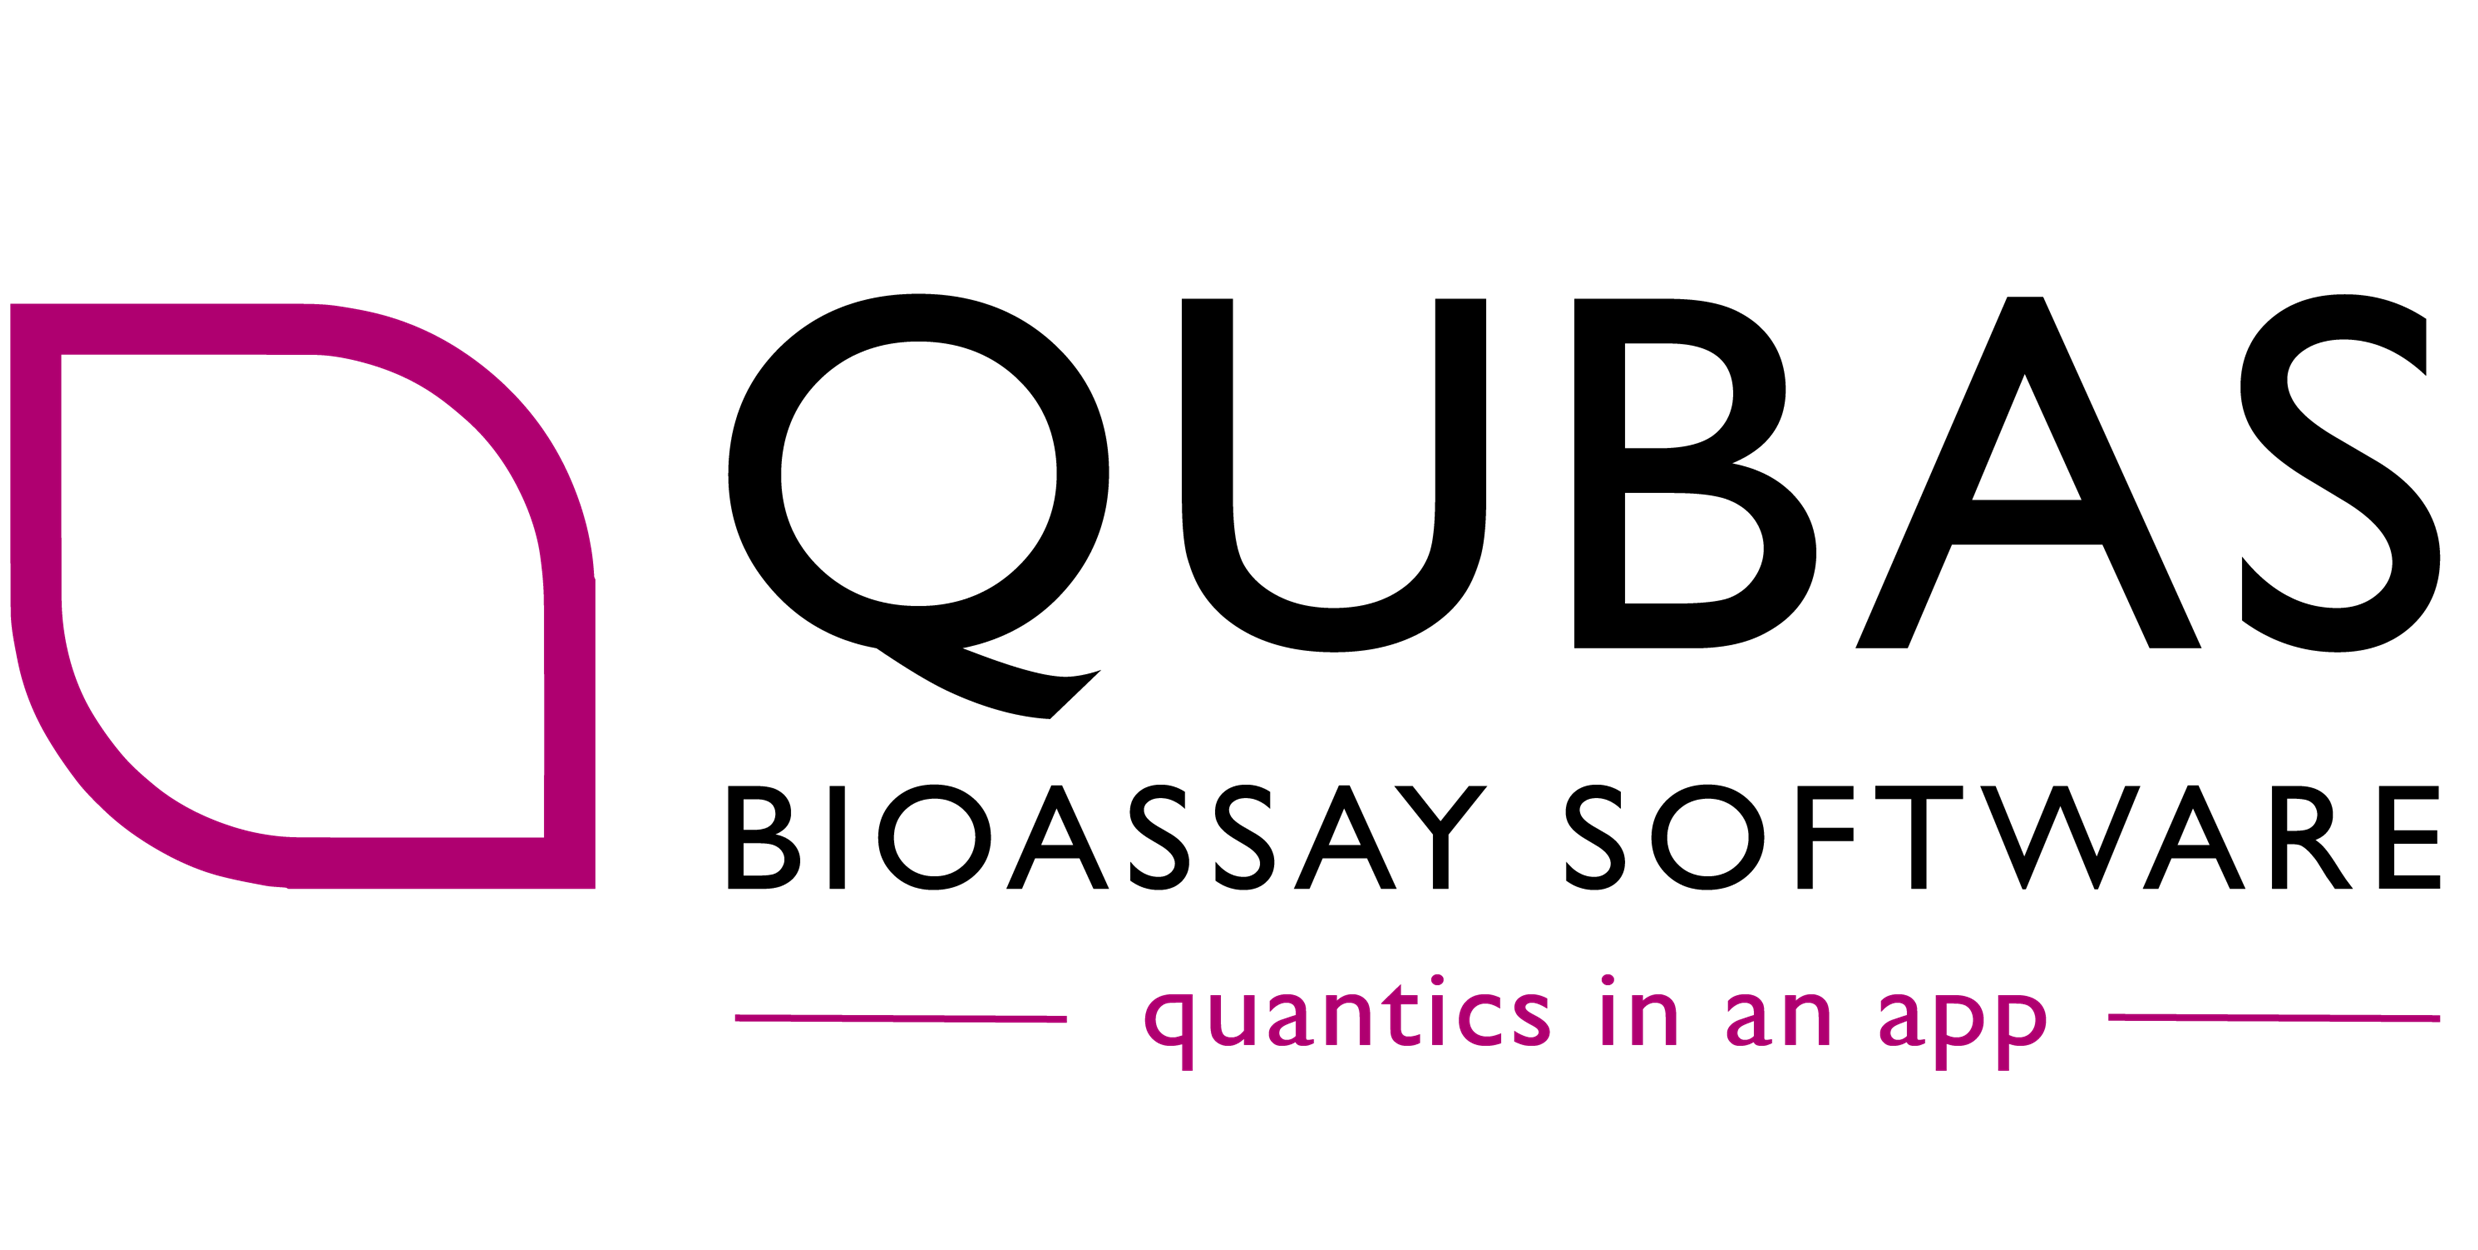 Company logo with text 'QUBAS Bioassay Software quantics in an app'